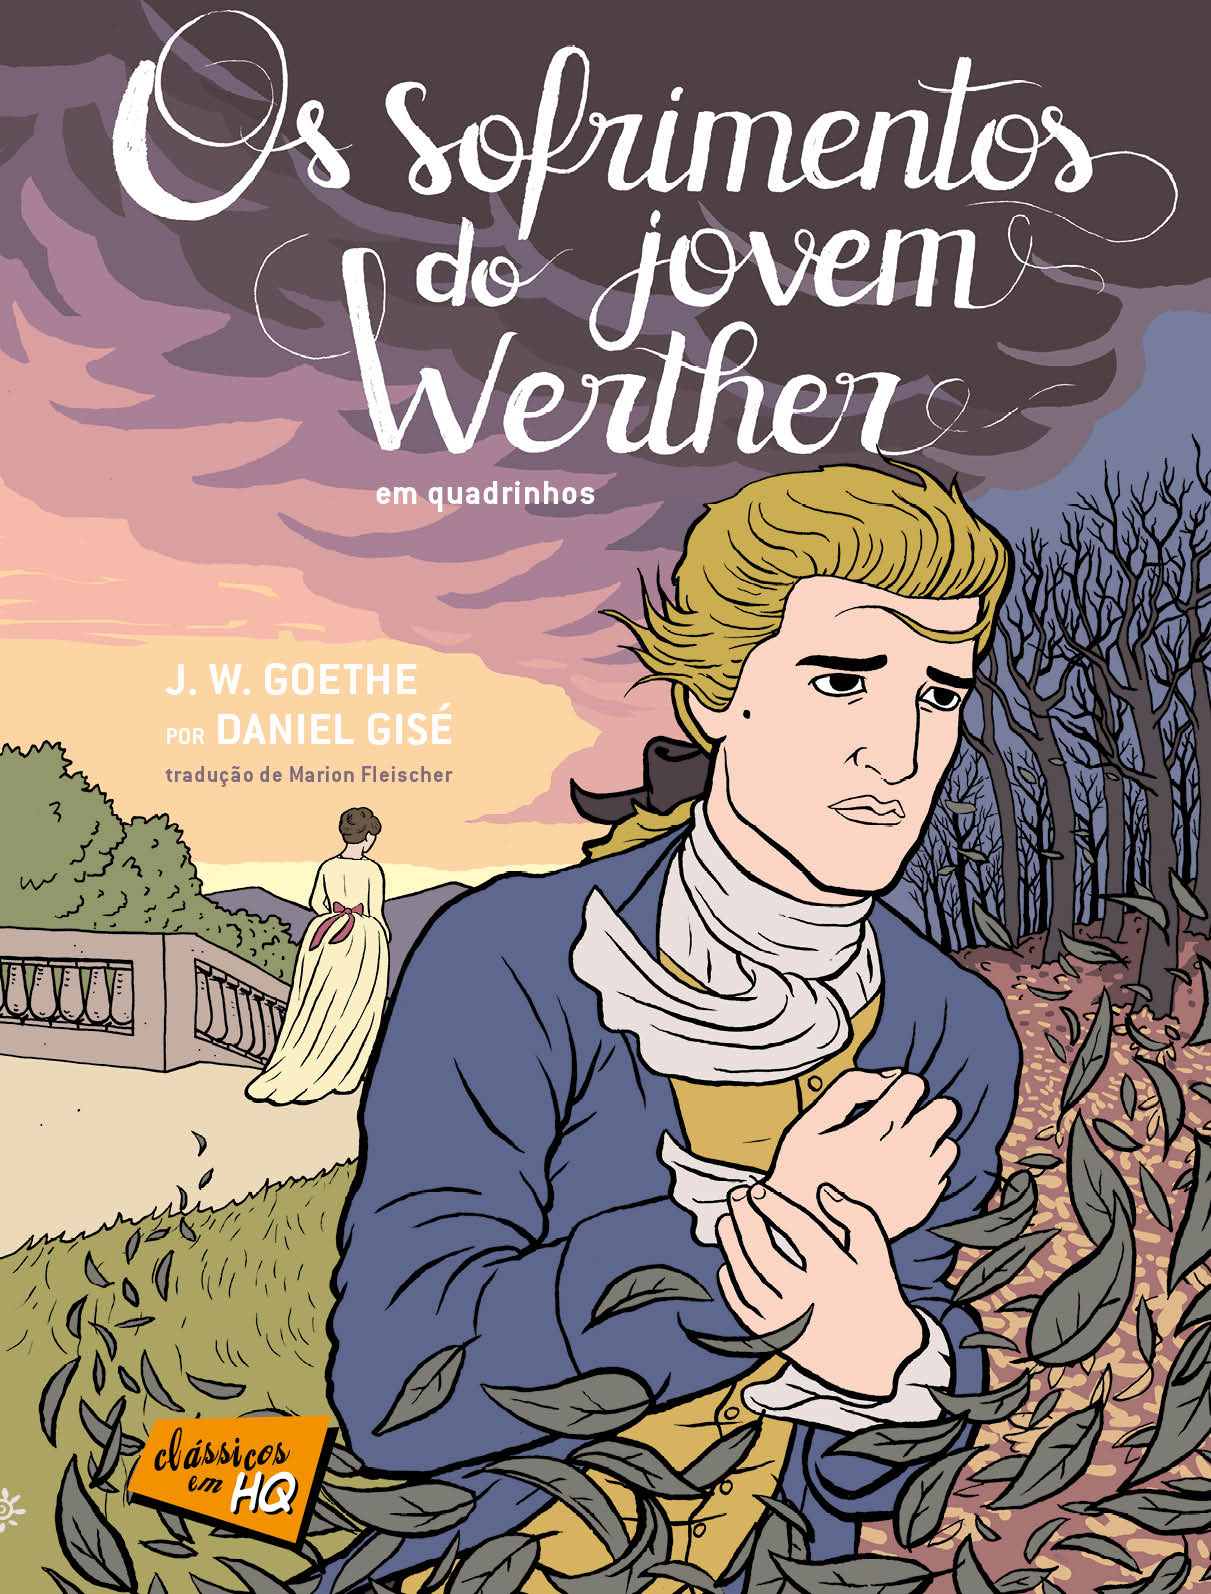 «Os sofrimentos do jovem Werther» Johann Wolfgang Von Goethe